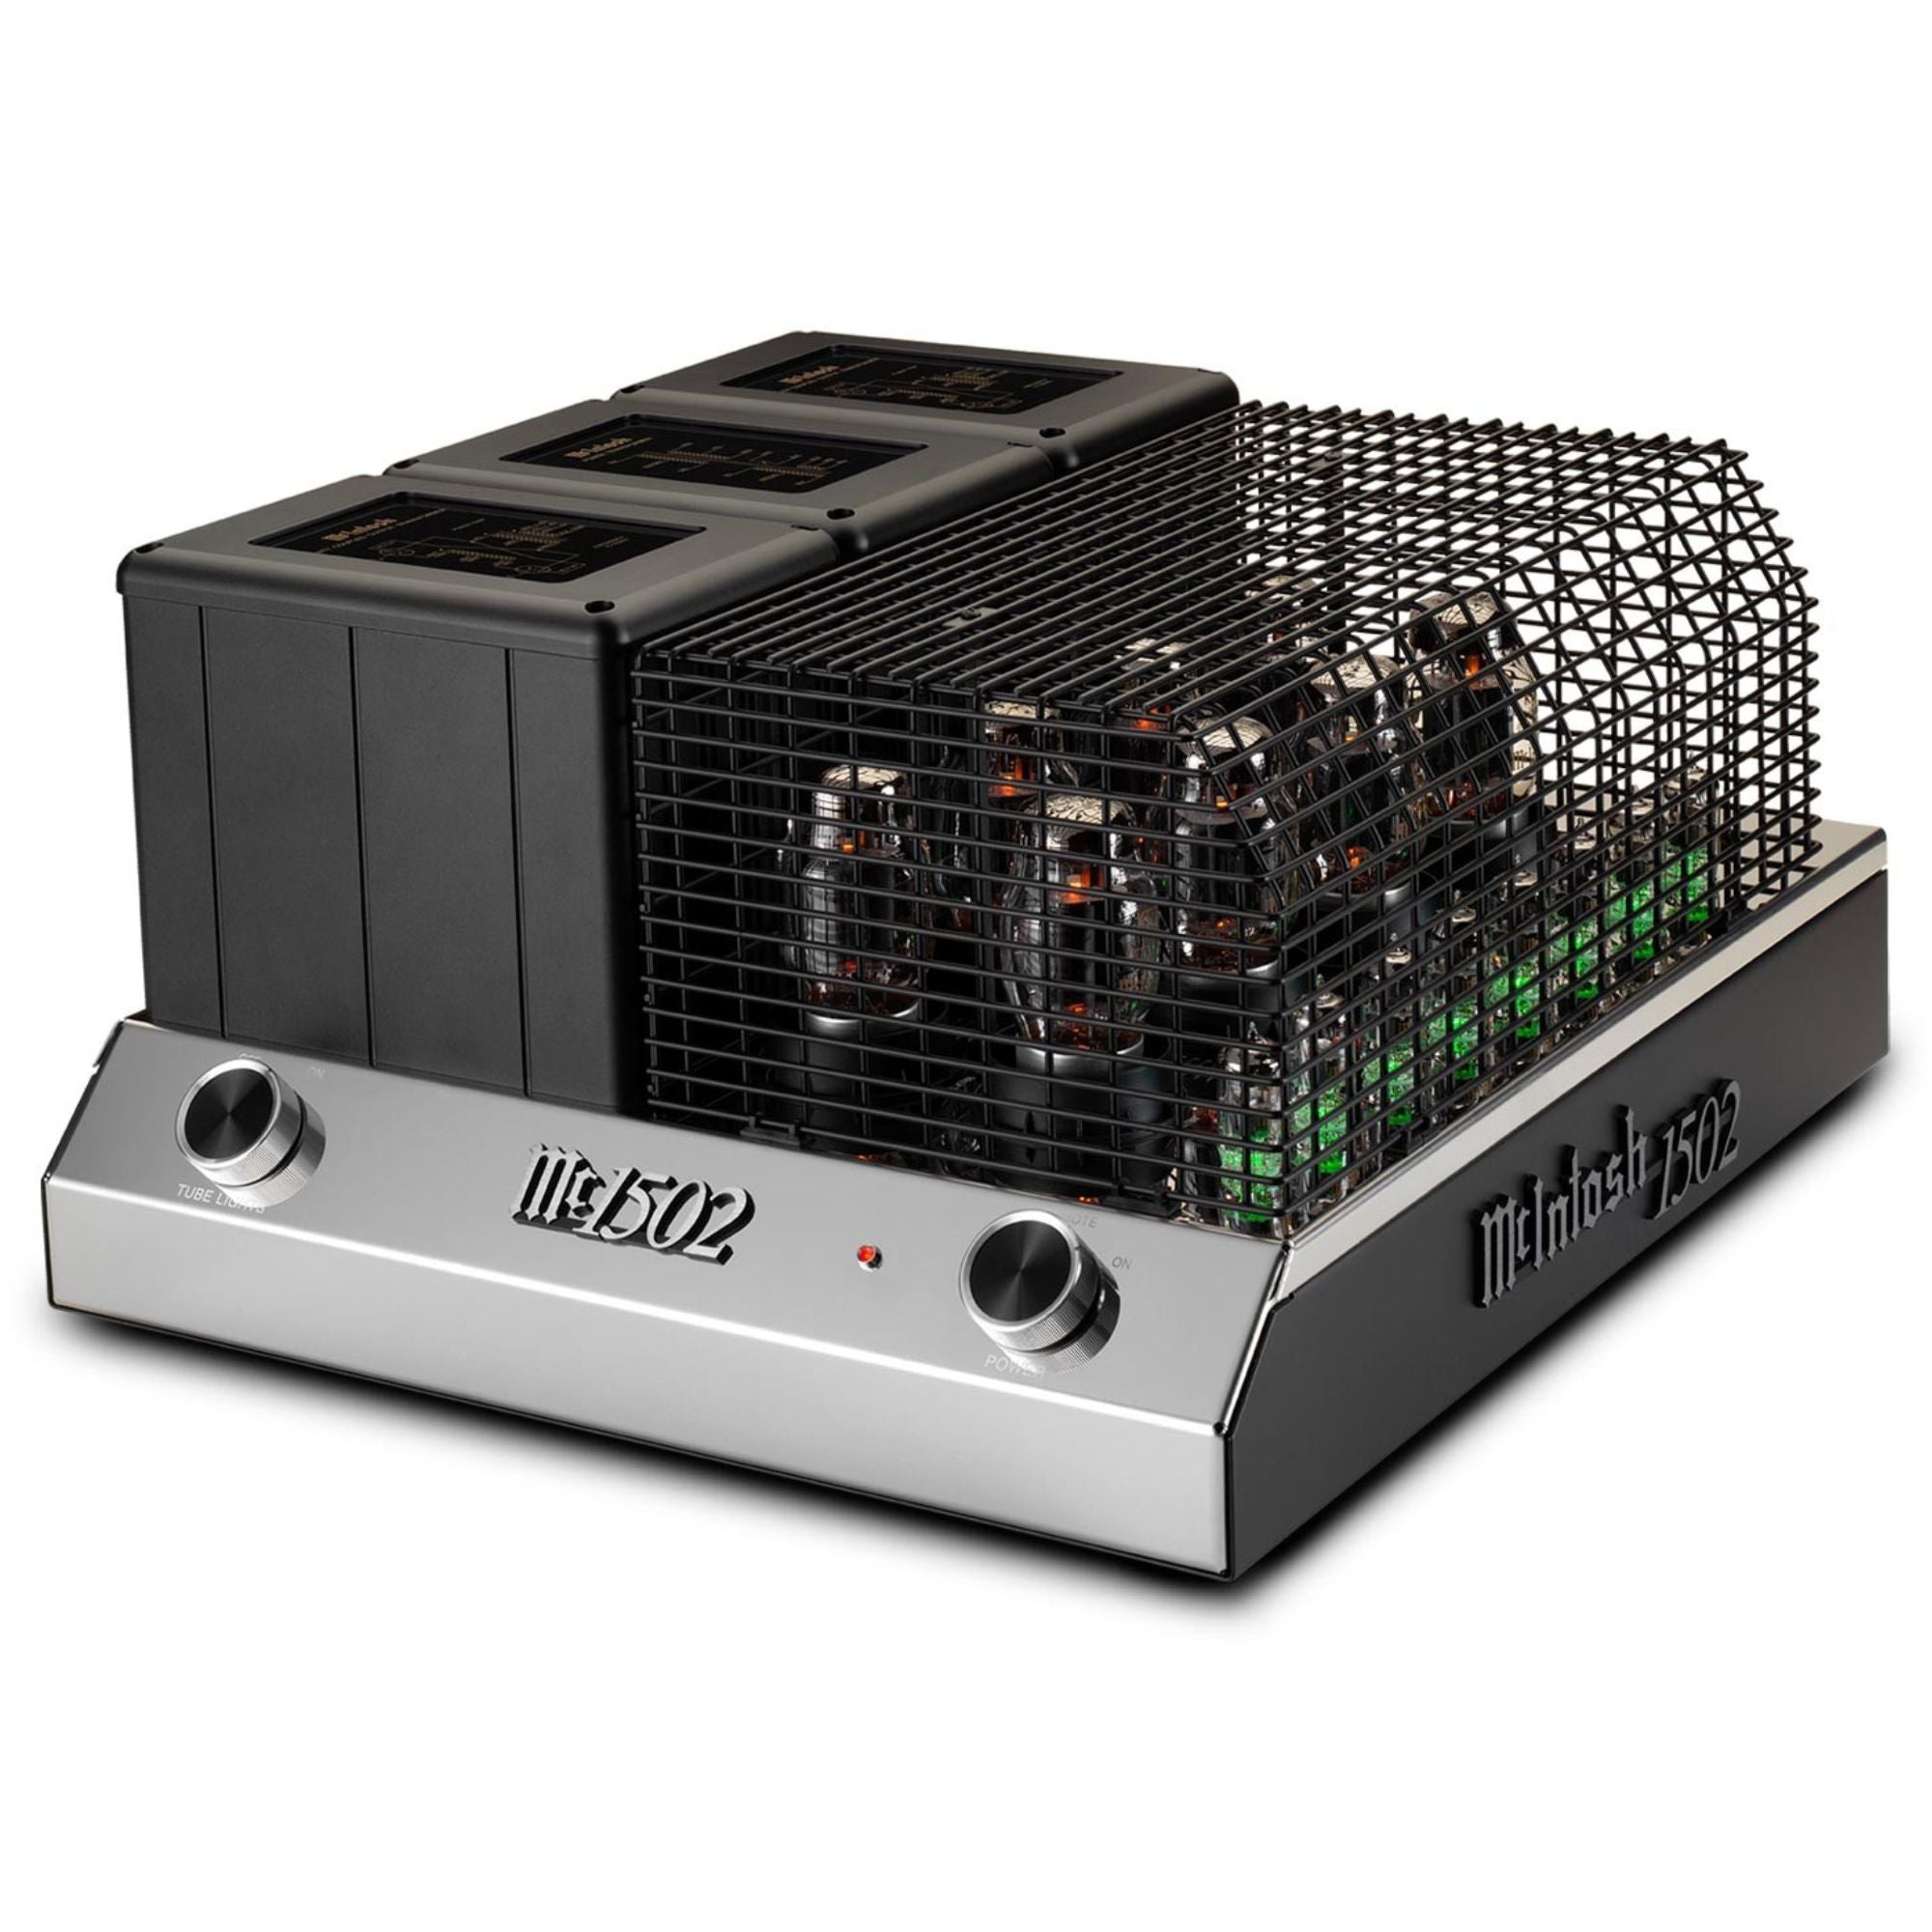 McIntosh Labs MC1502 - 2 Channel Vacuum Tube Power Amplifier - AVStore